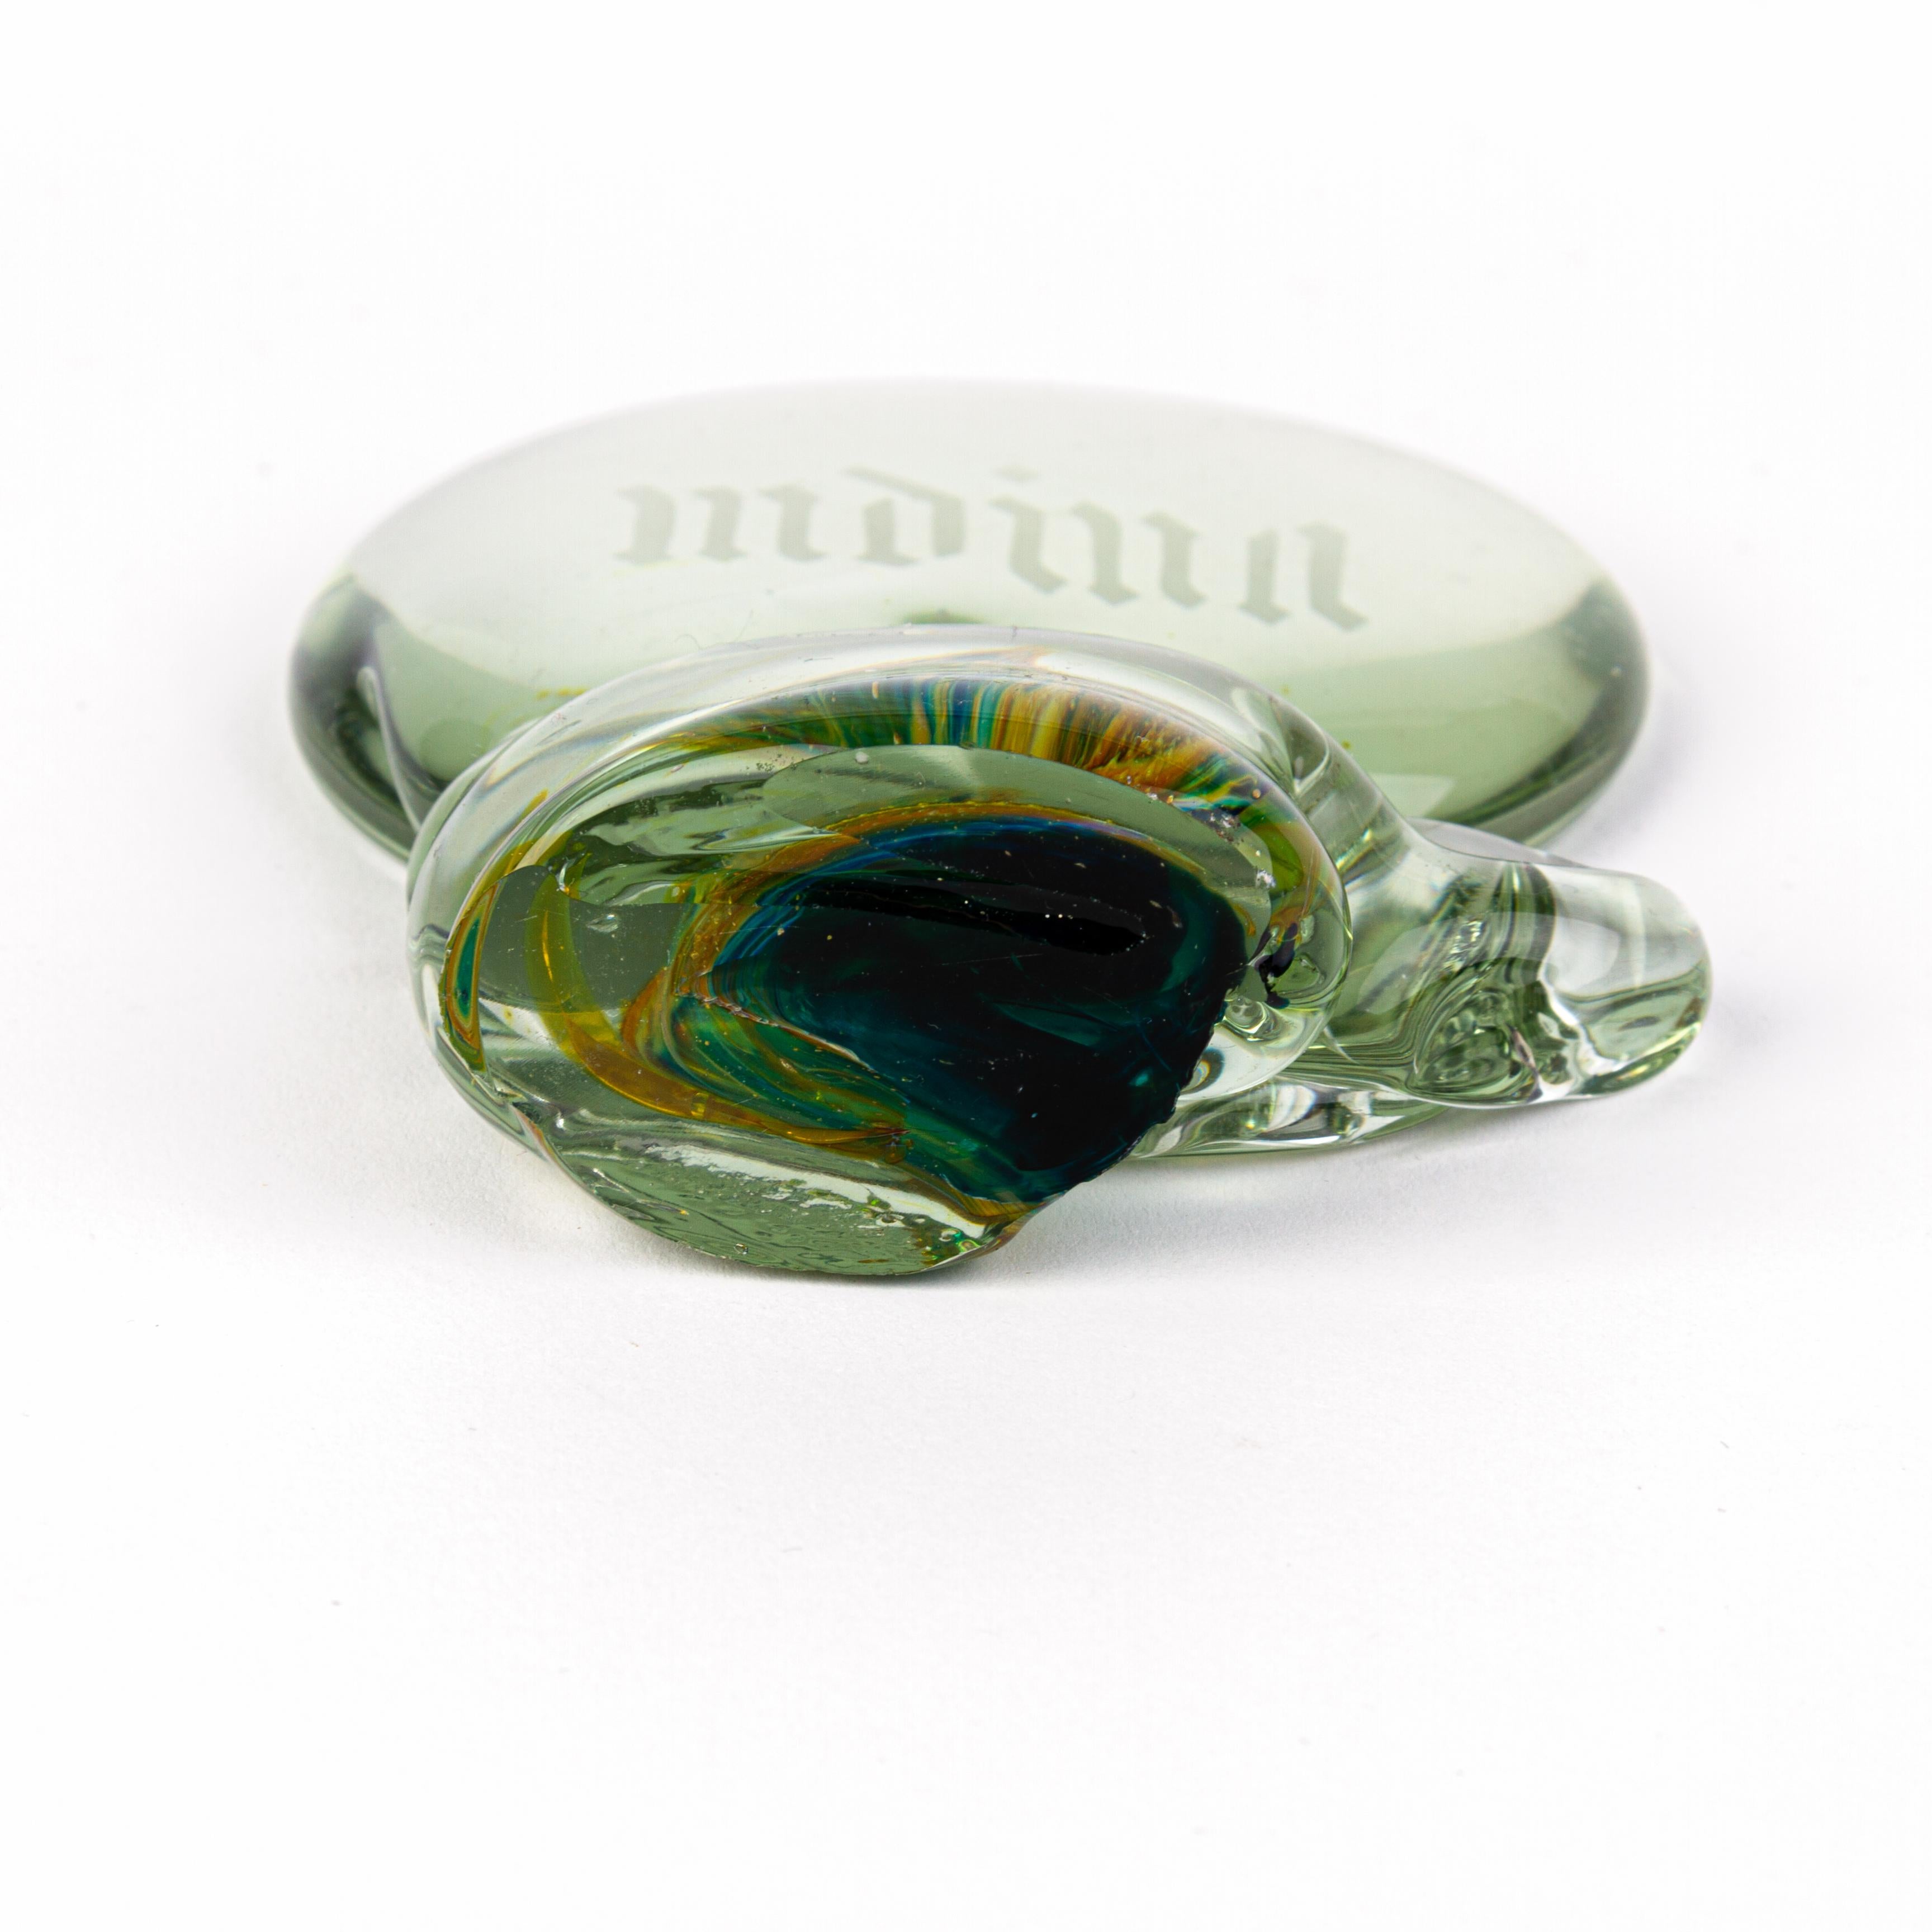 Mdina Maltese Designer Glass Paperweight   For Sale 1